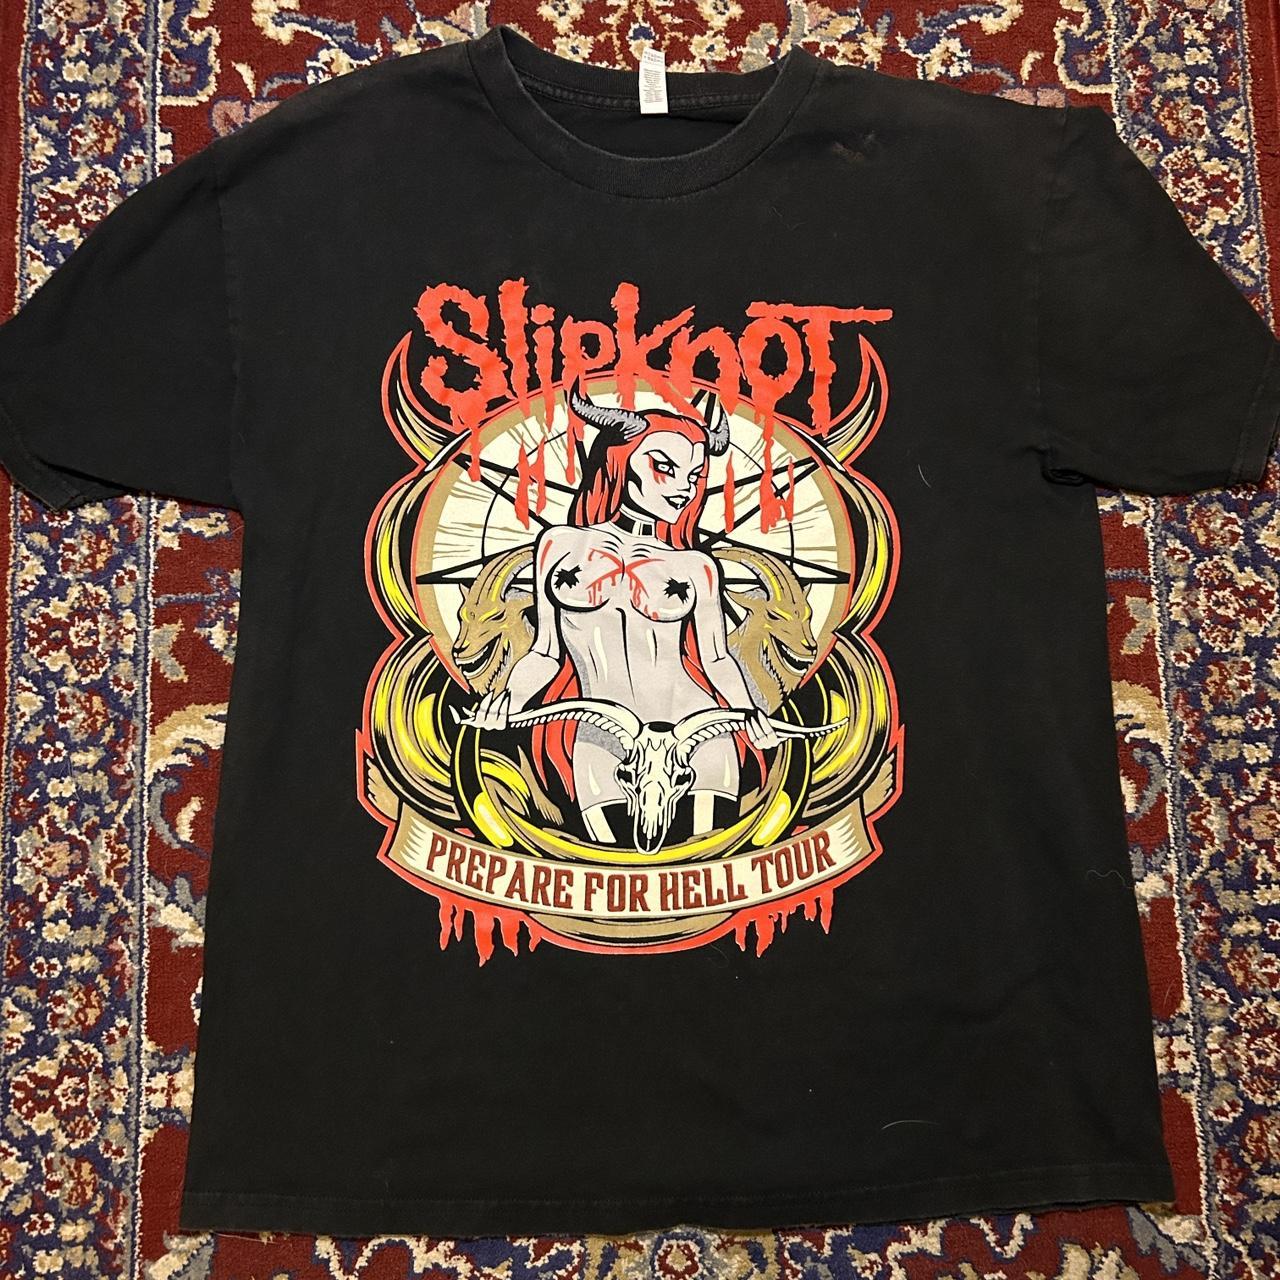 Slipknot “Prepare for hell tour” shirt! Unsiex size... - Depop